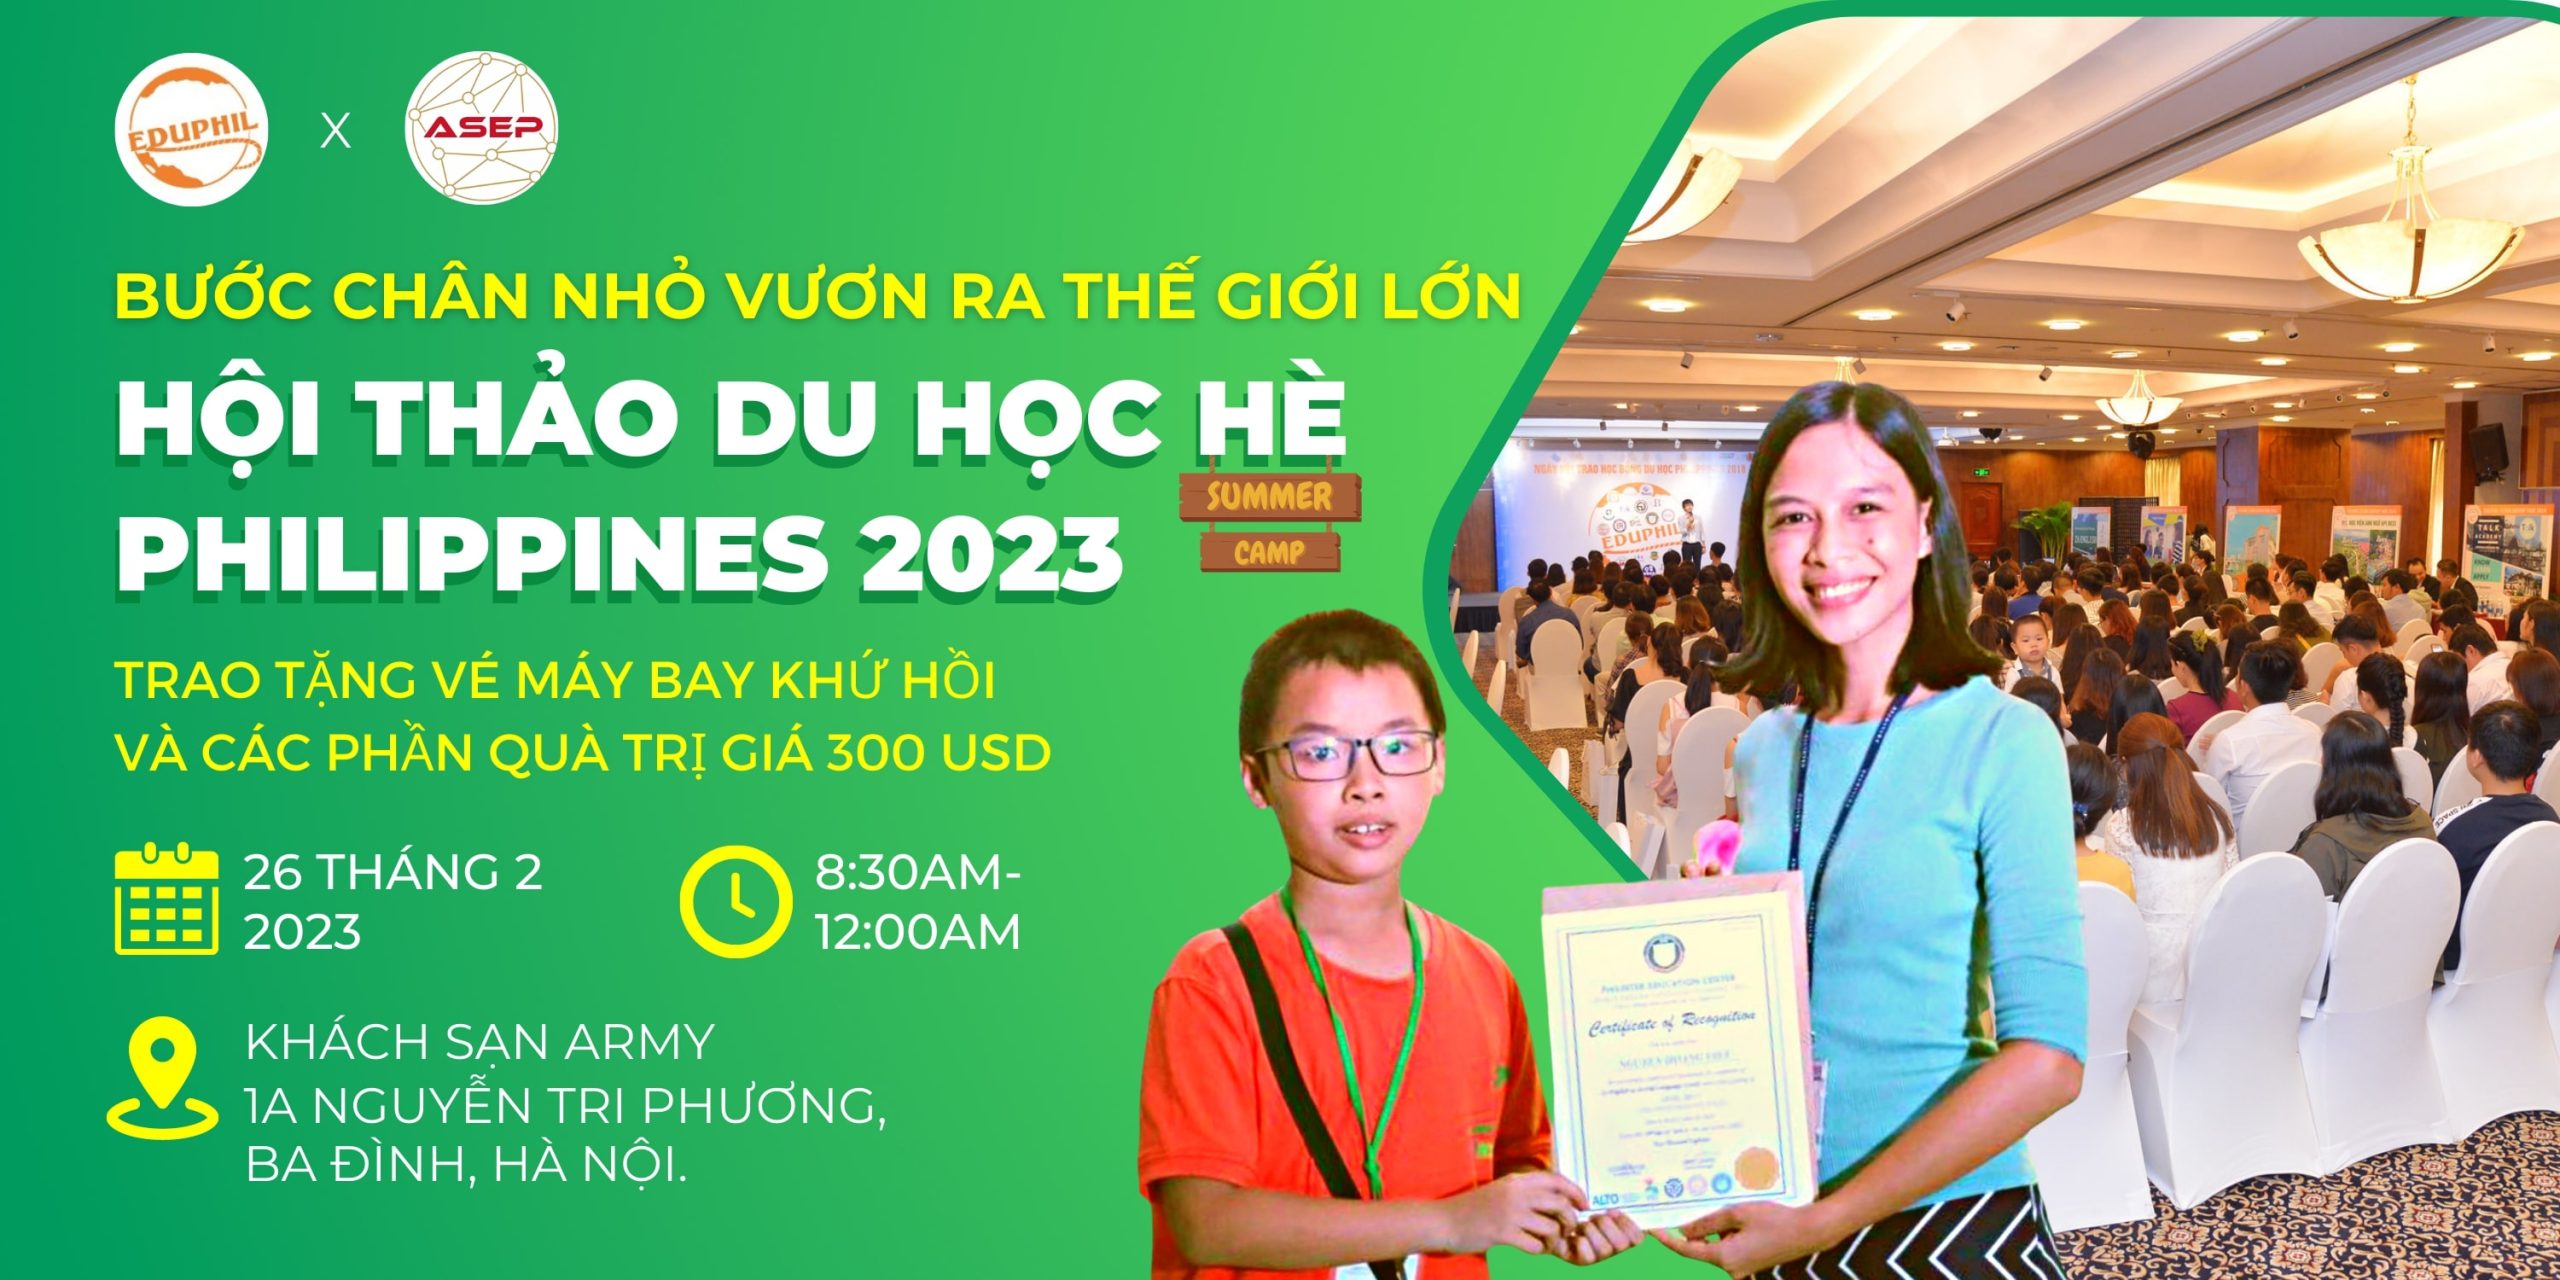 hoi-thao-du-hoc-he-philippines-2023-ha-noi (2)